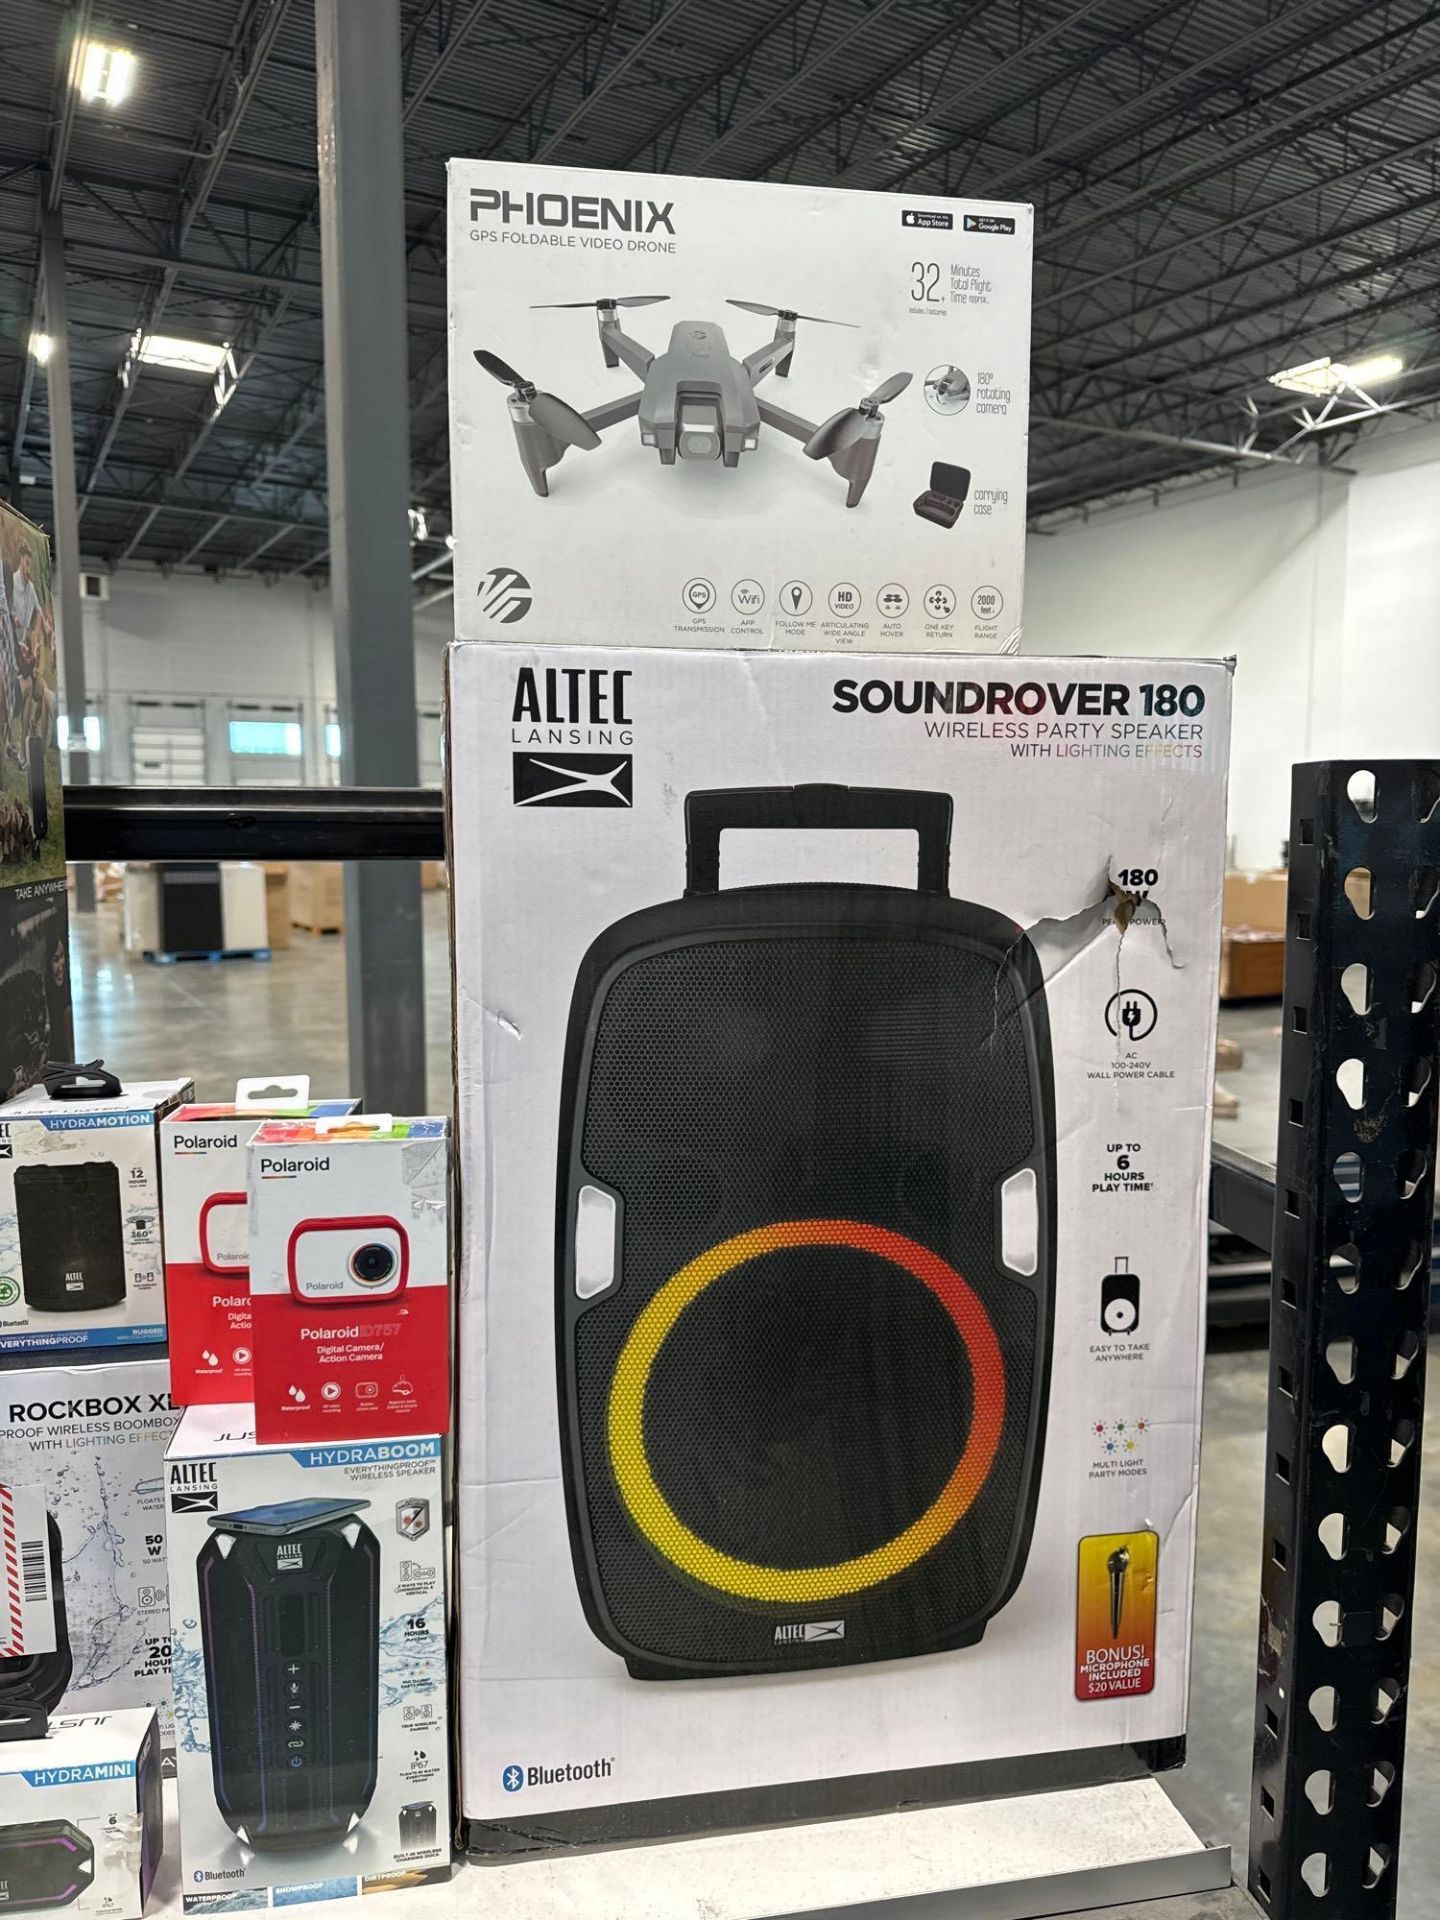 4k camcorders & altec speakers - Image 2 of 4